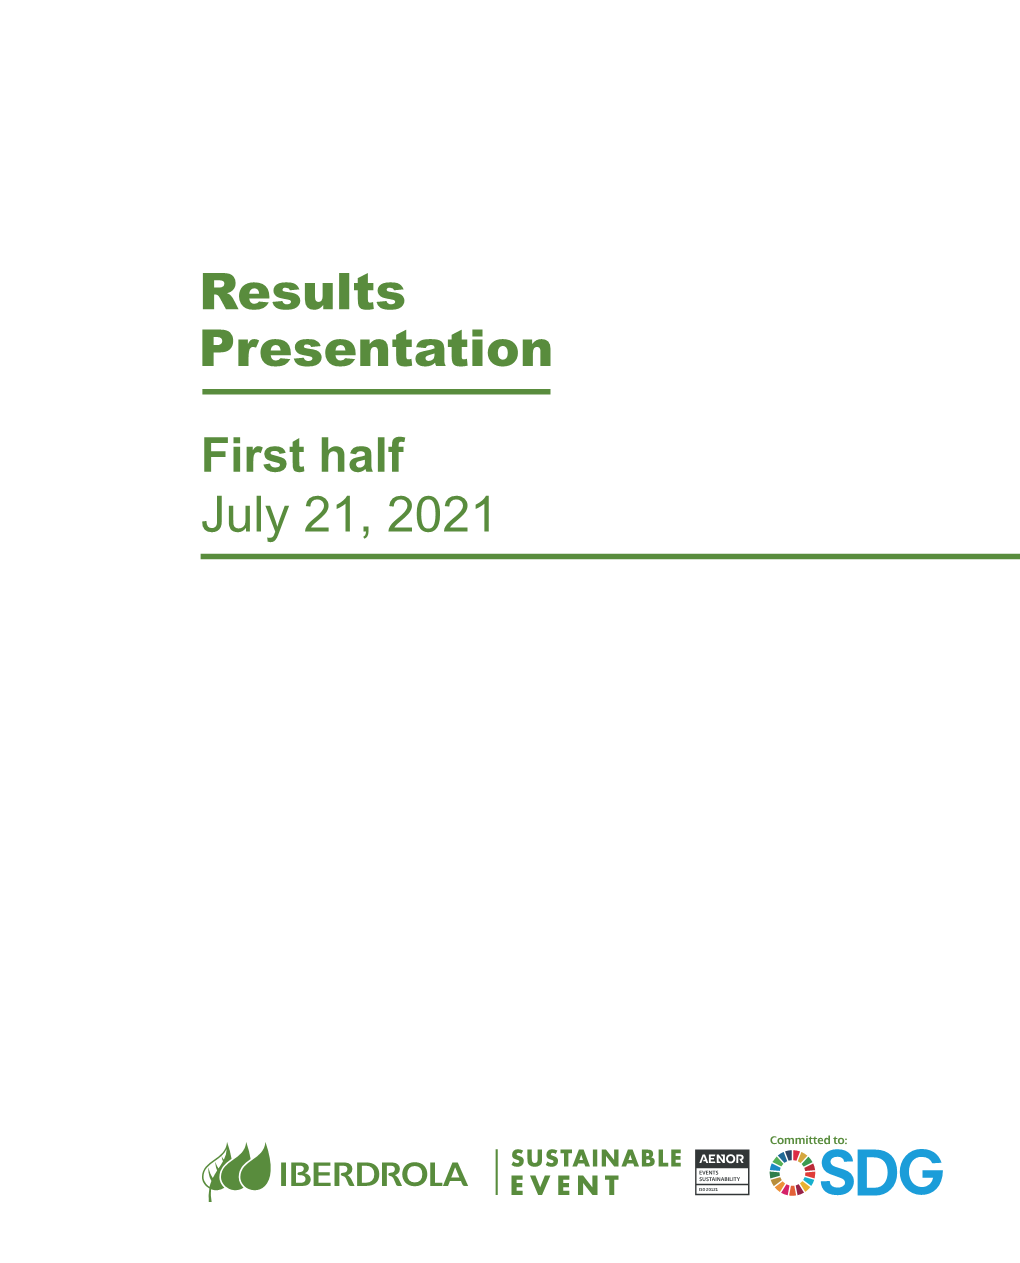 Results Presentation, Fisrt Half July 21, 2021